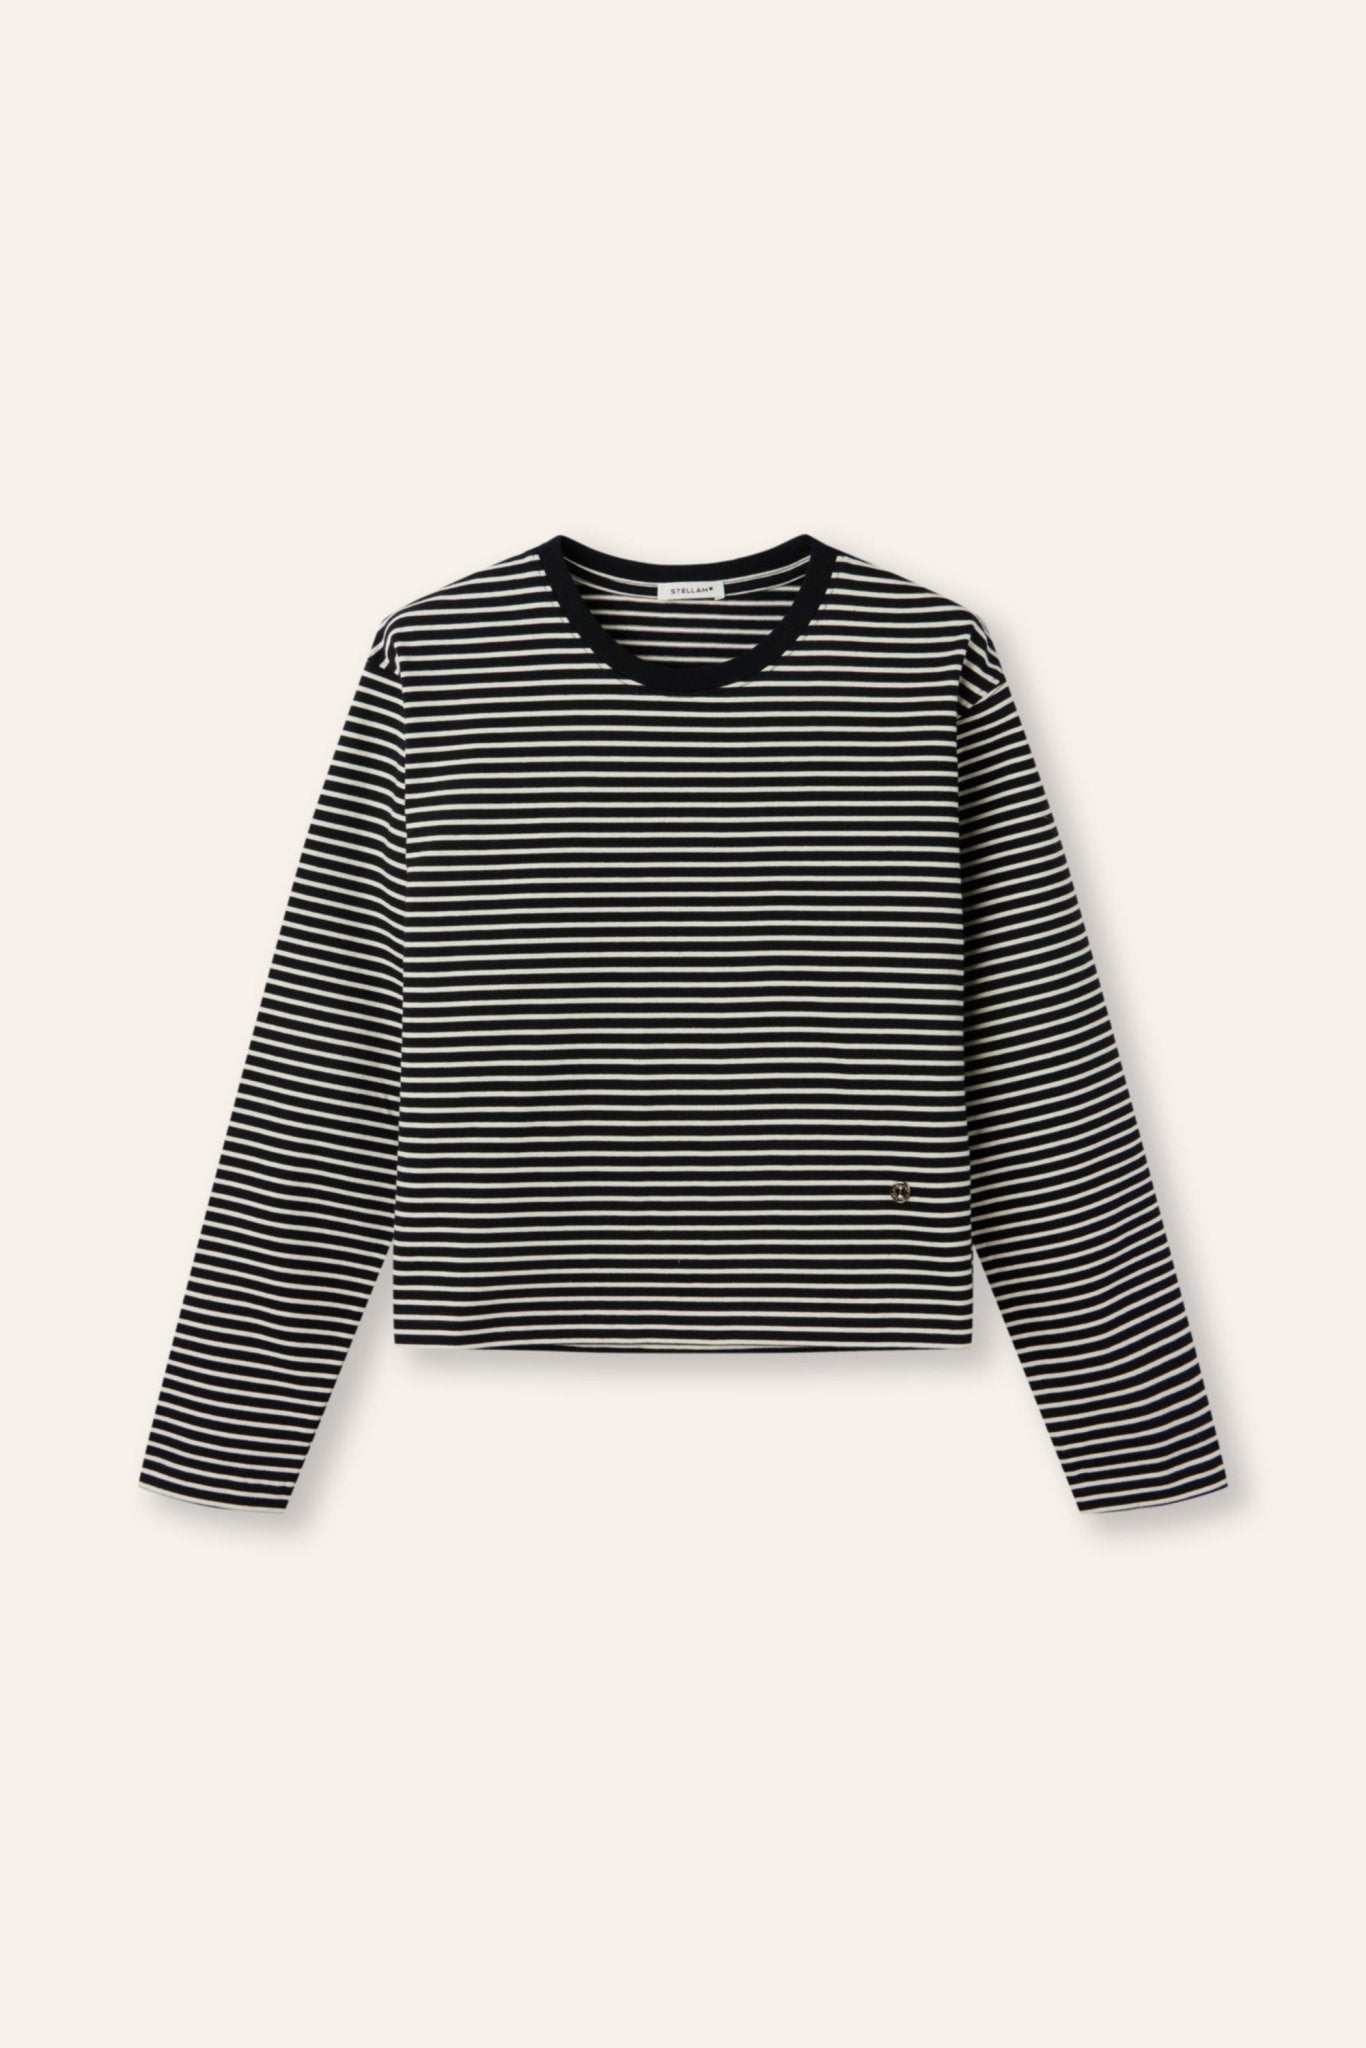 LUKE cotton stripe top (Black stripe) - STELLAM